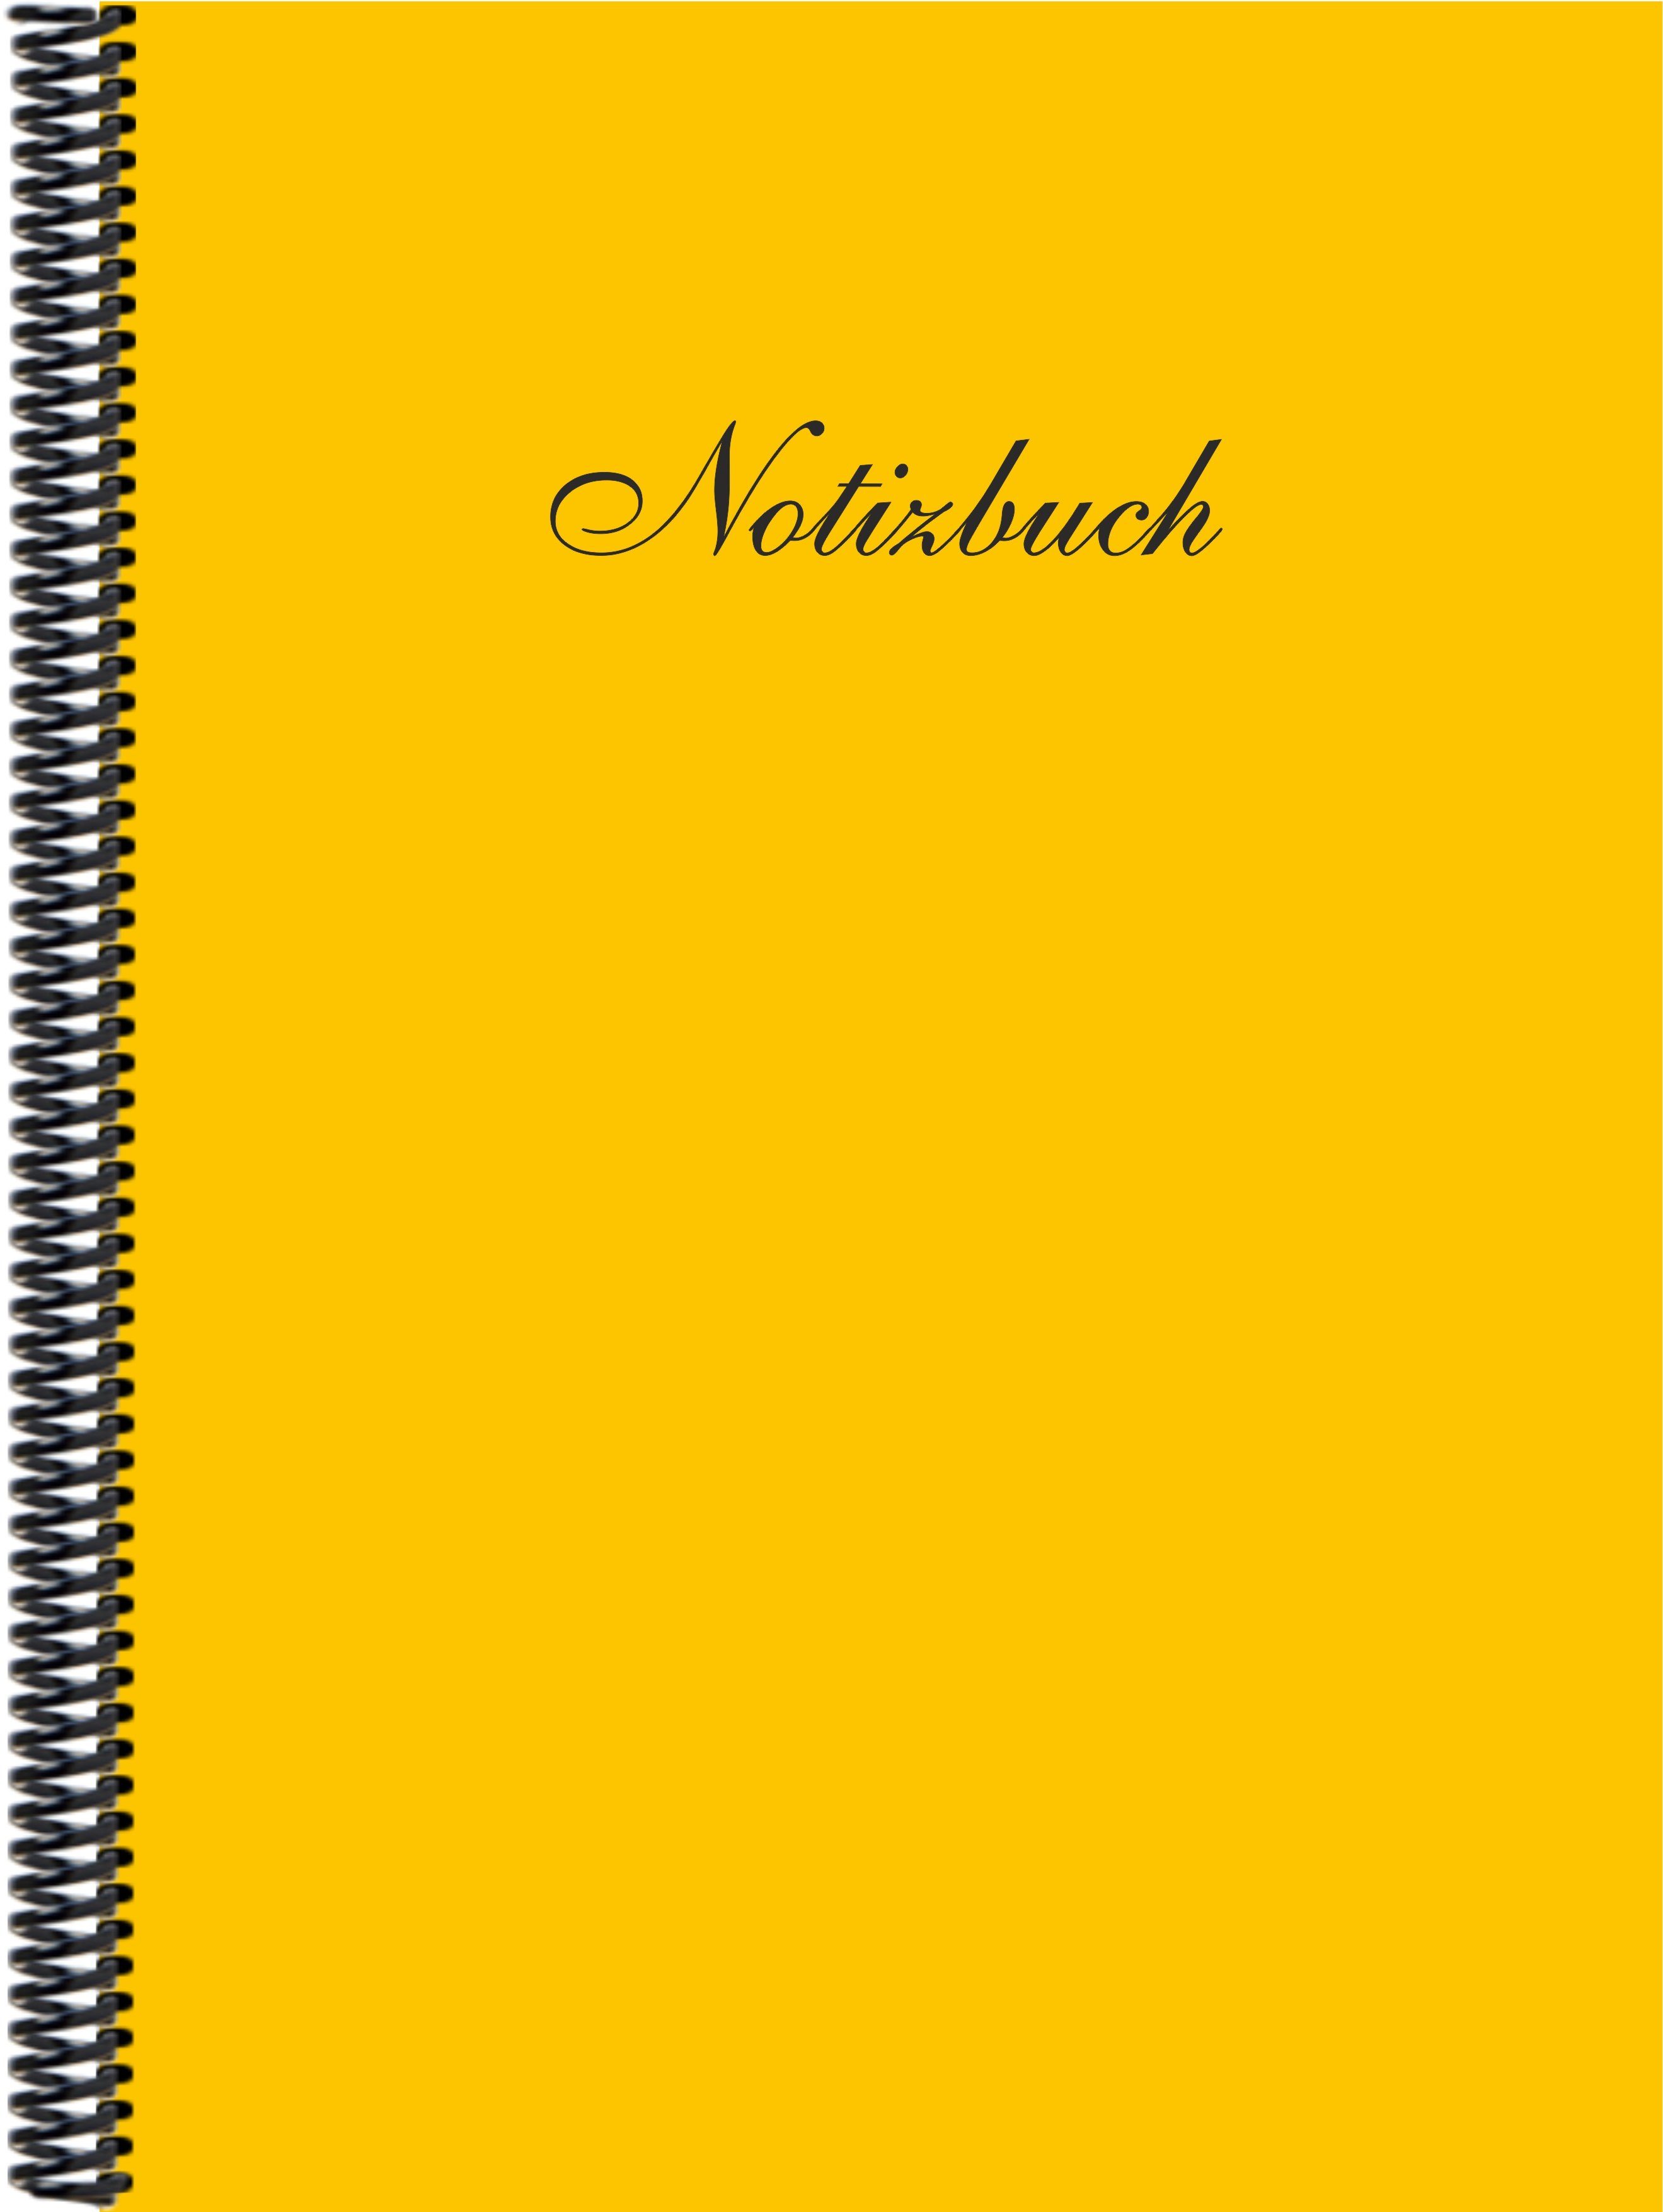 Gmbh der E&Z Trendfarbe DINA4 Verlag Notizbuch in blanko, Notizbuch goldgelb